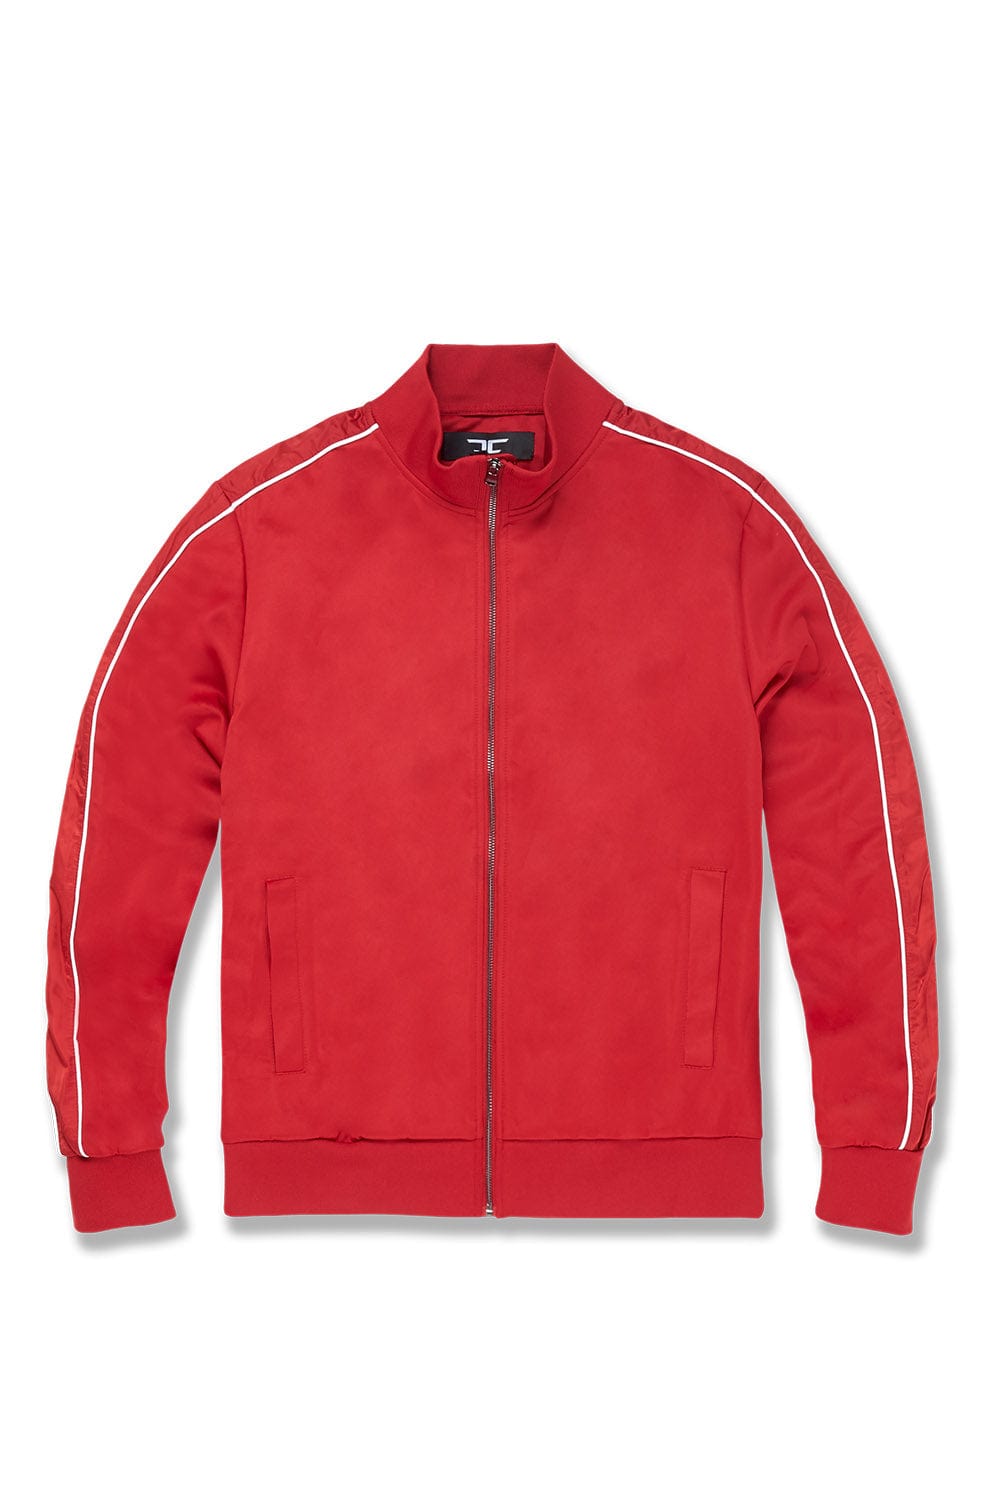 Jordan Craig Trenton Track Jacket (Red) S / Red